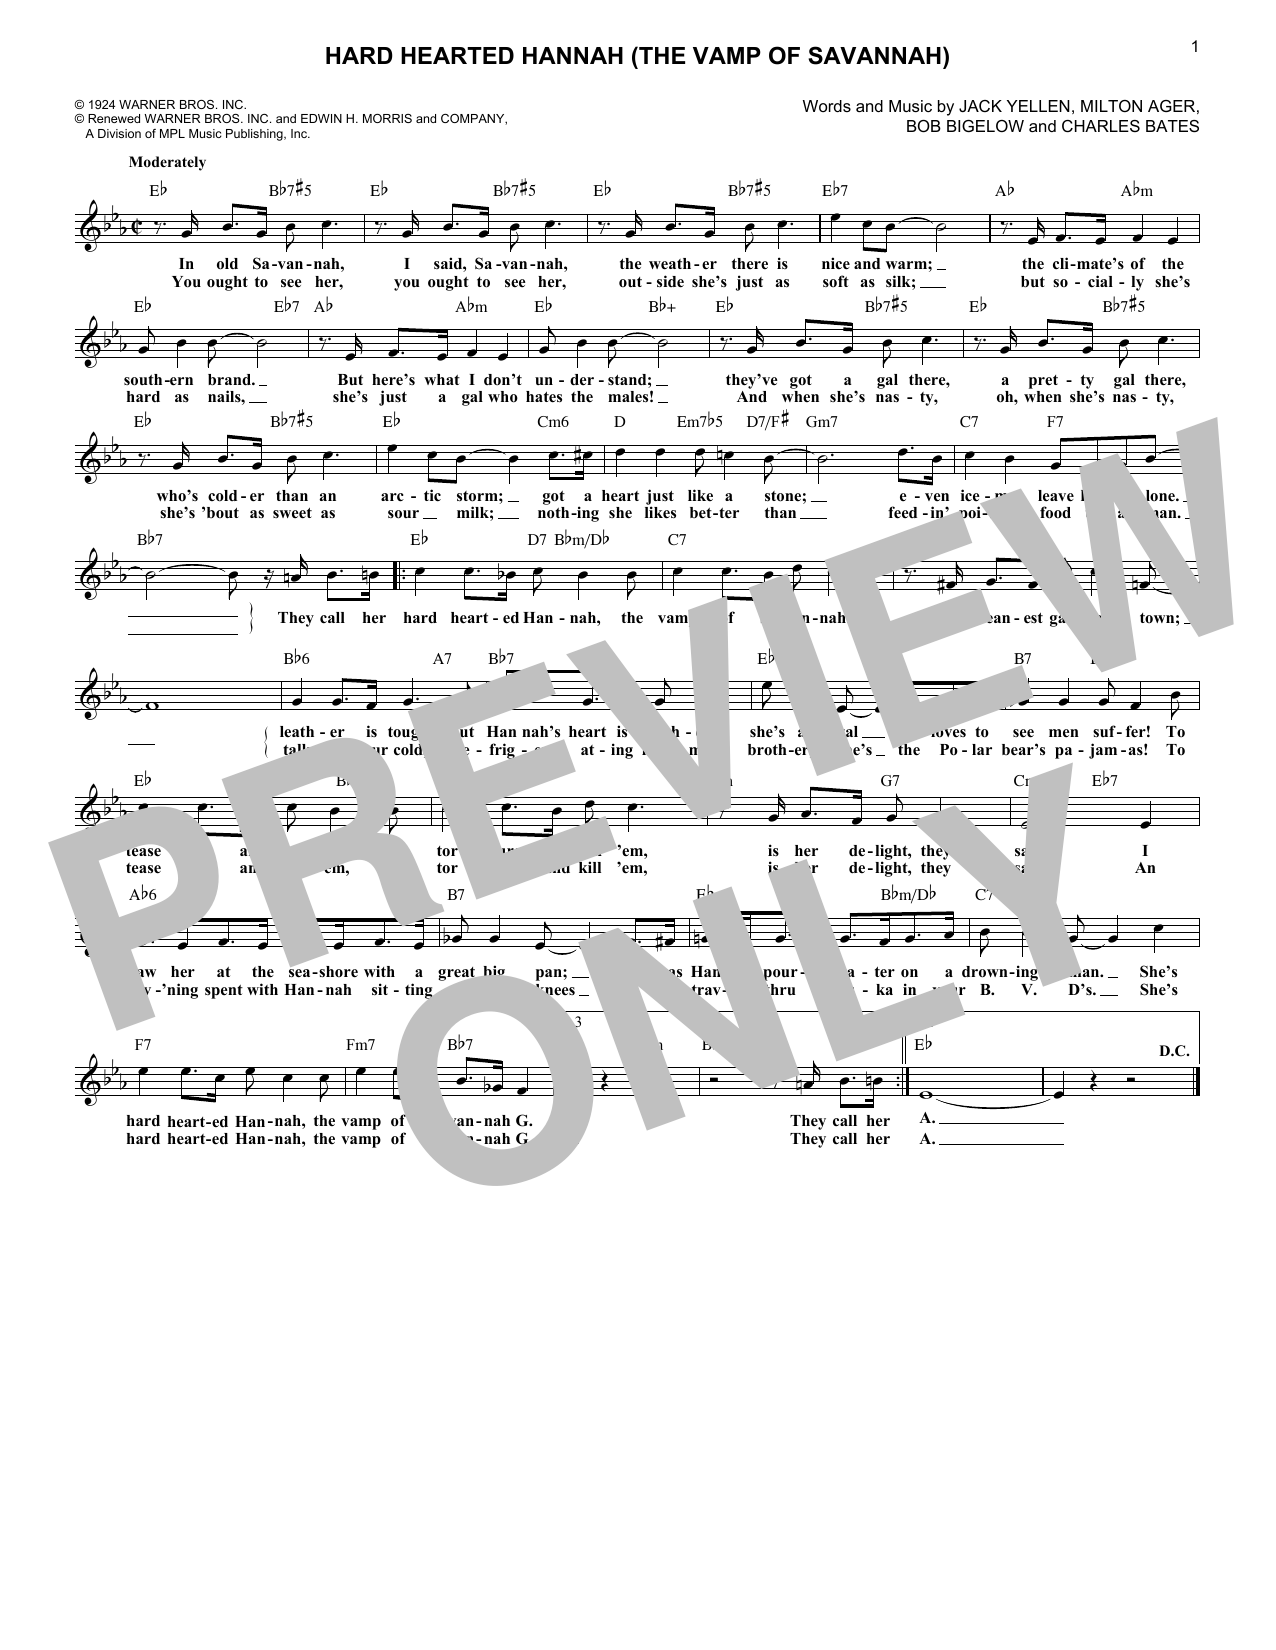 Charles Bates Hard Hearted Hannah (The Vamp Of Savannah) Sheet Music Notes & Chords for Lead Sheet / Fake Book - Download or Print PDF